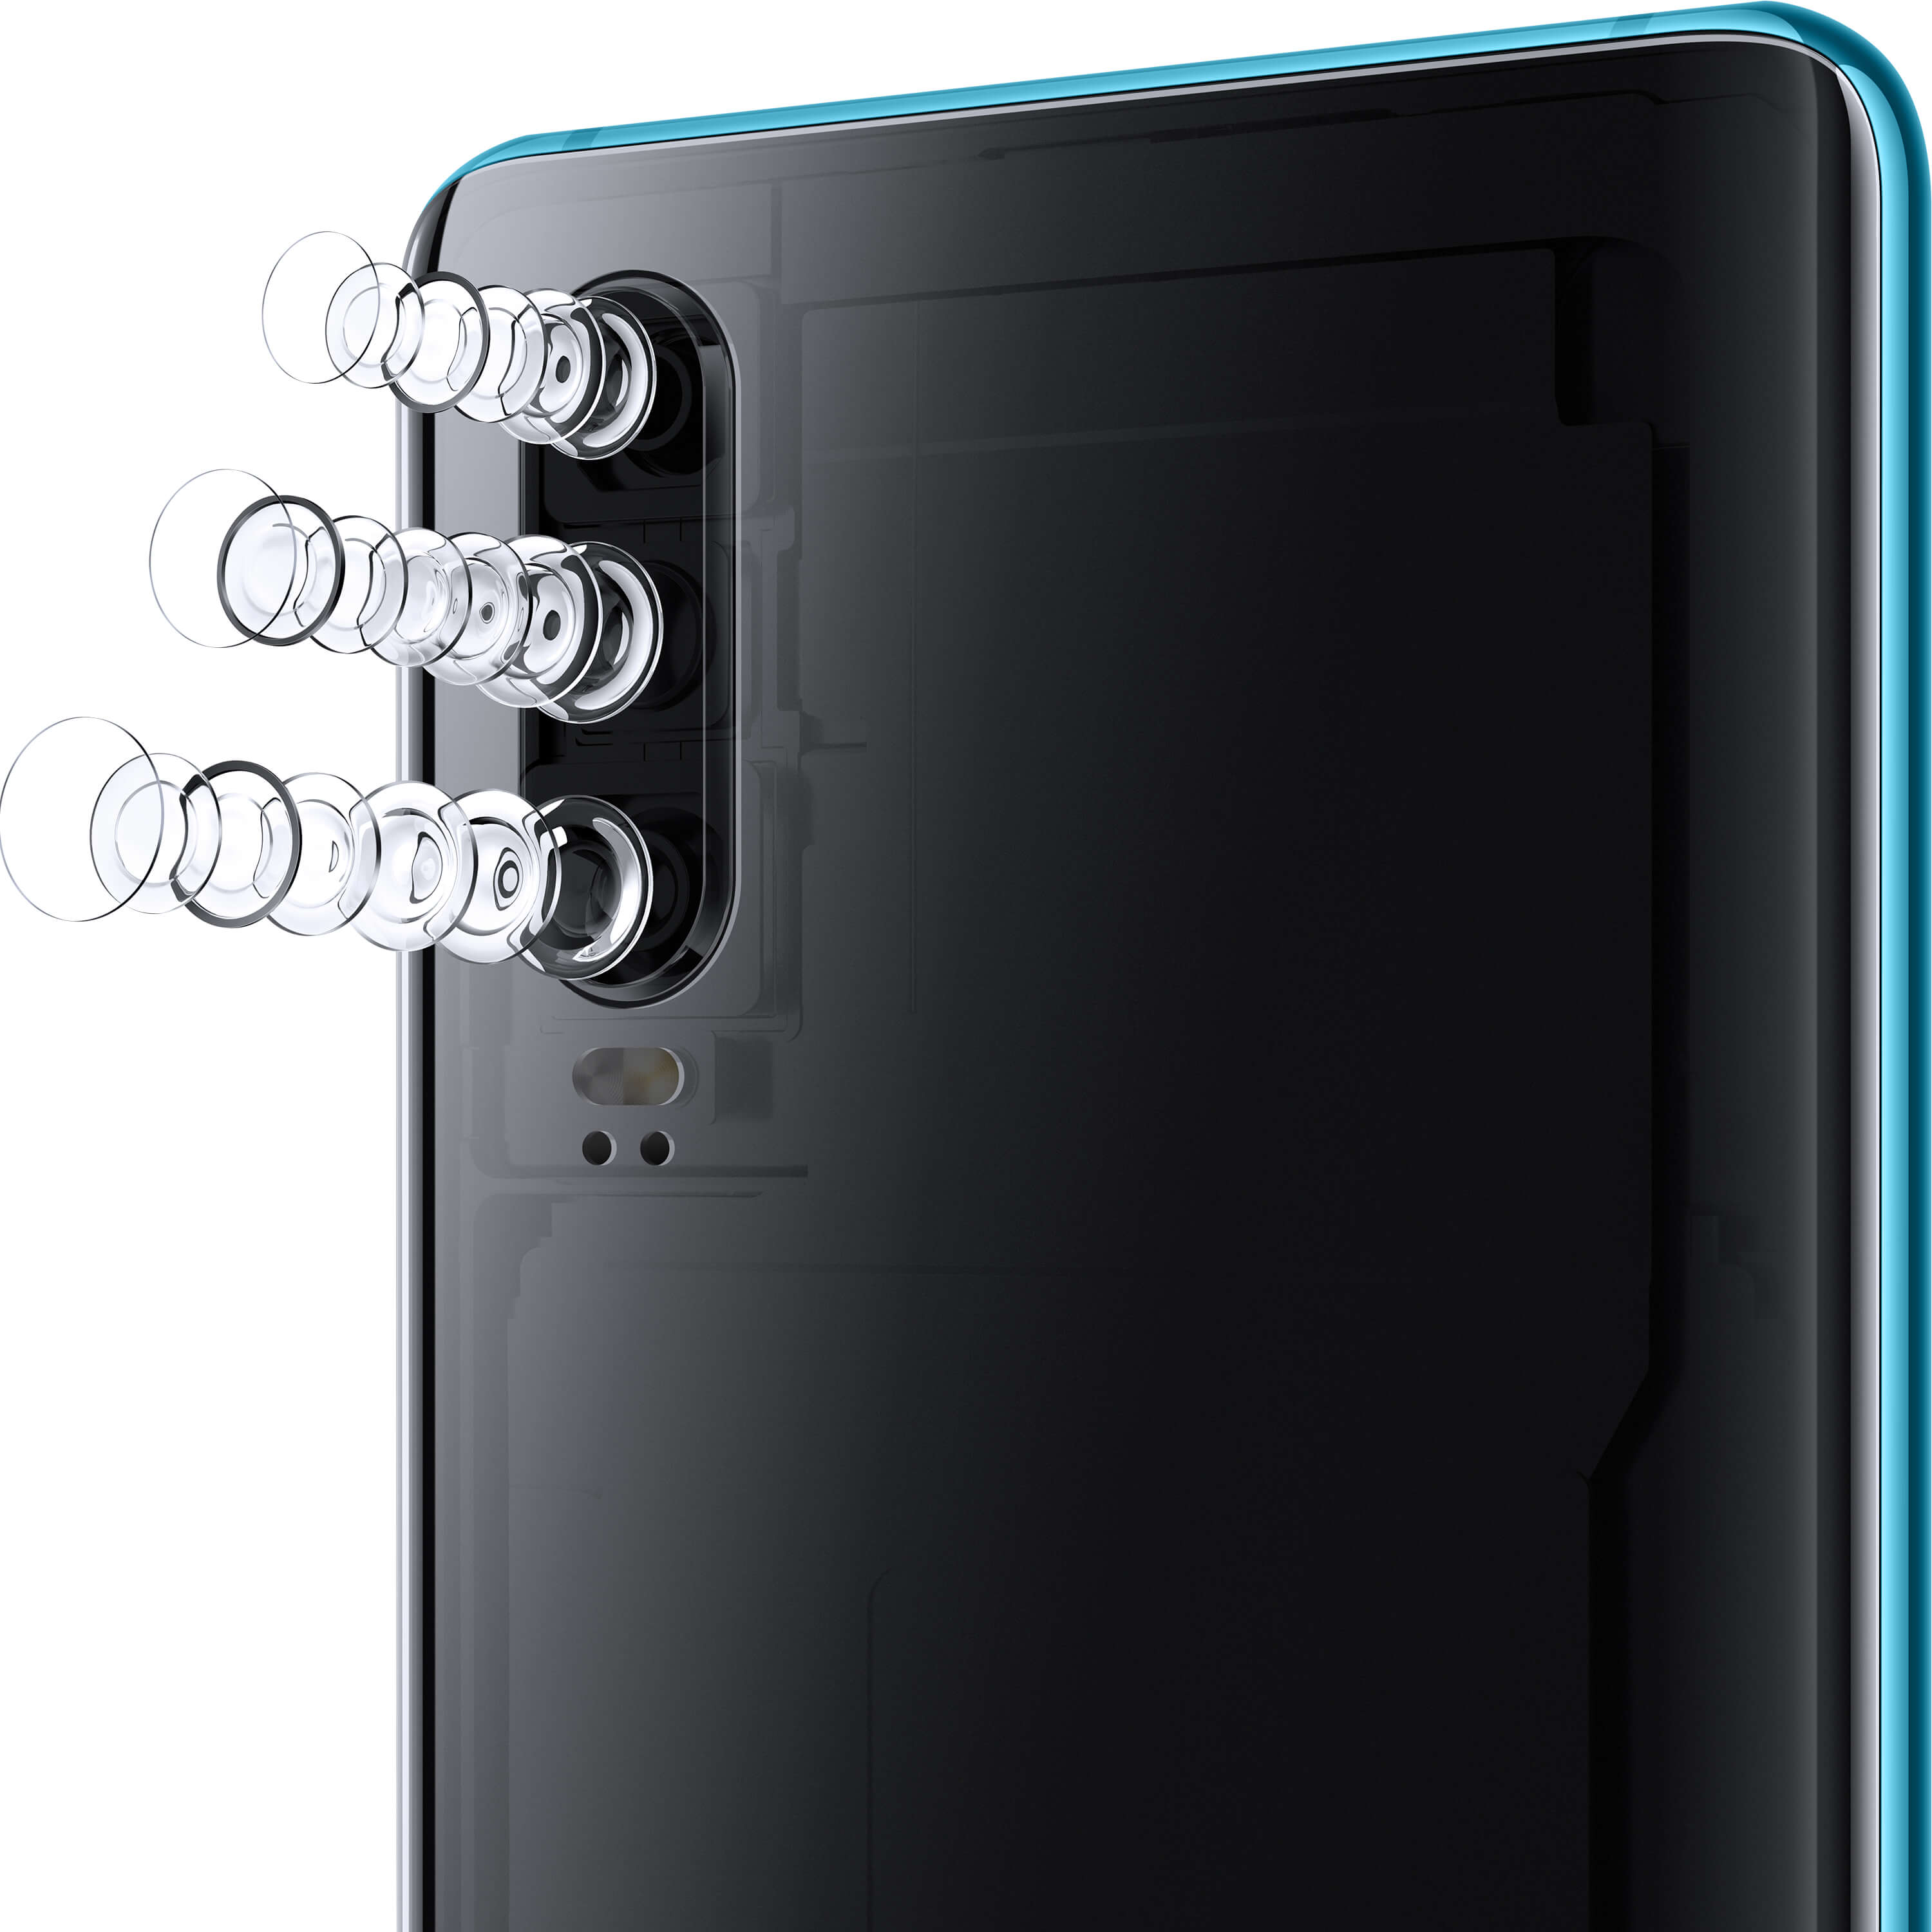 Mobilní telefon HUAWEI P30 Dual Sim Gradientní modrá modrý blue